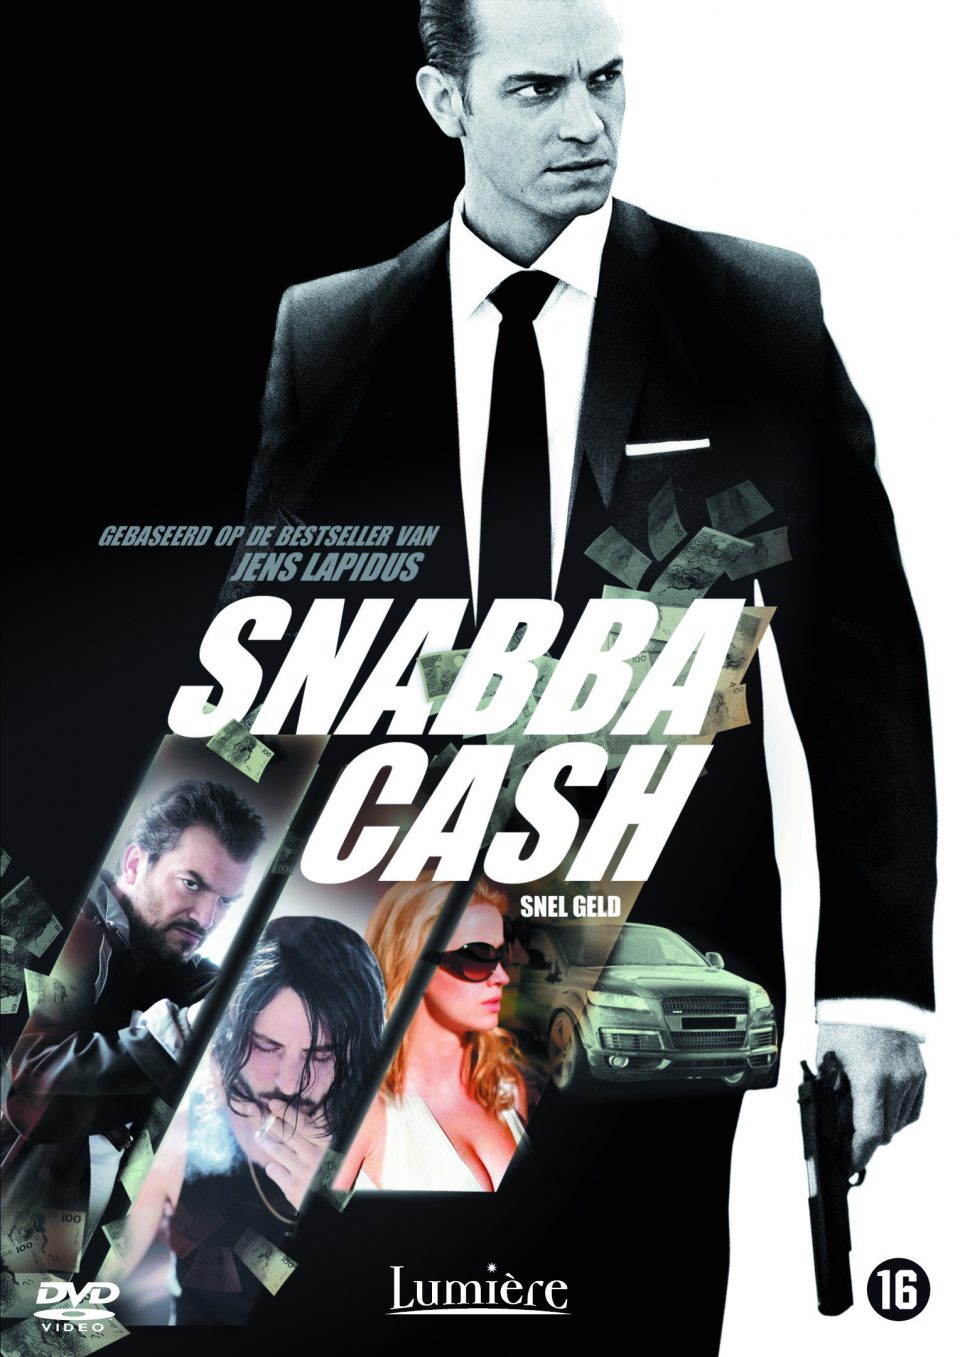 Shabba Cash DVD_2D